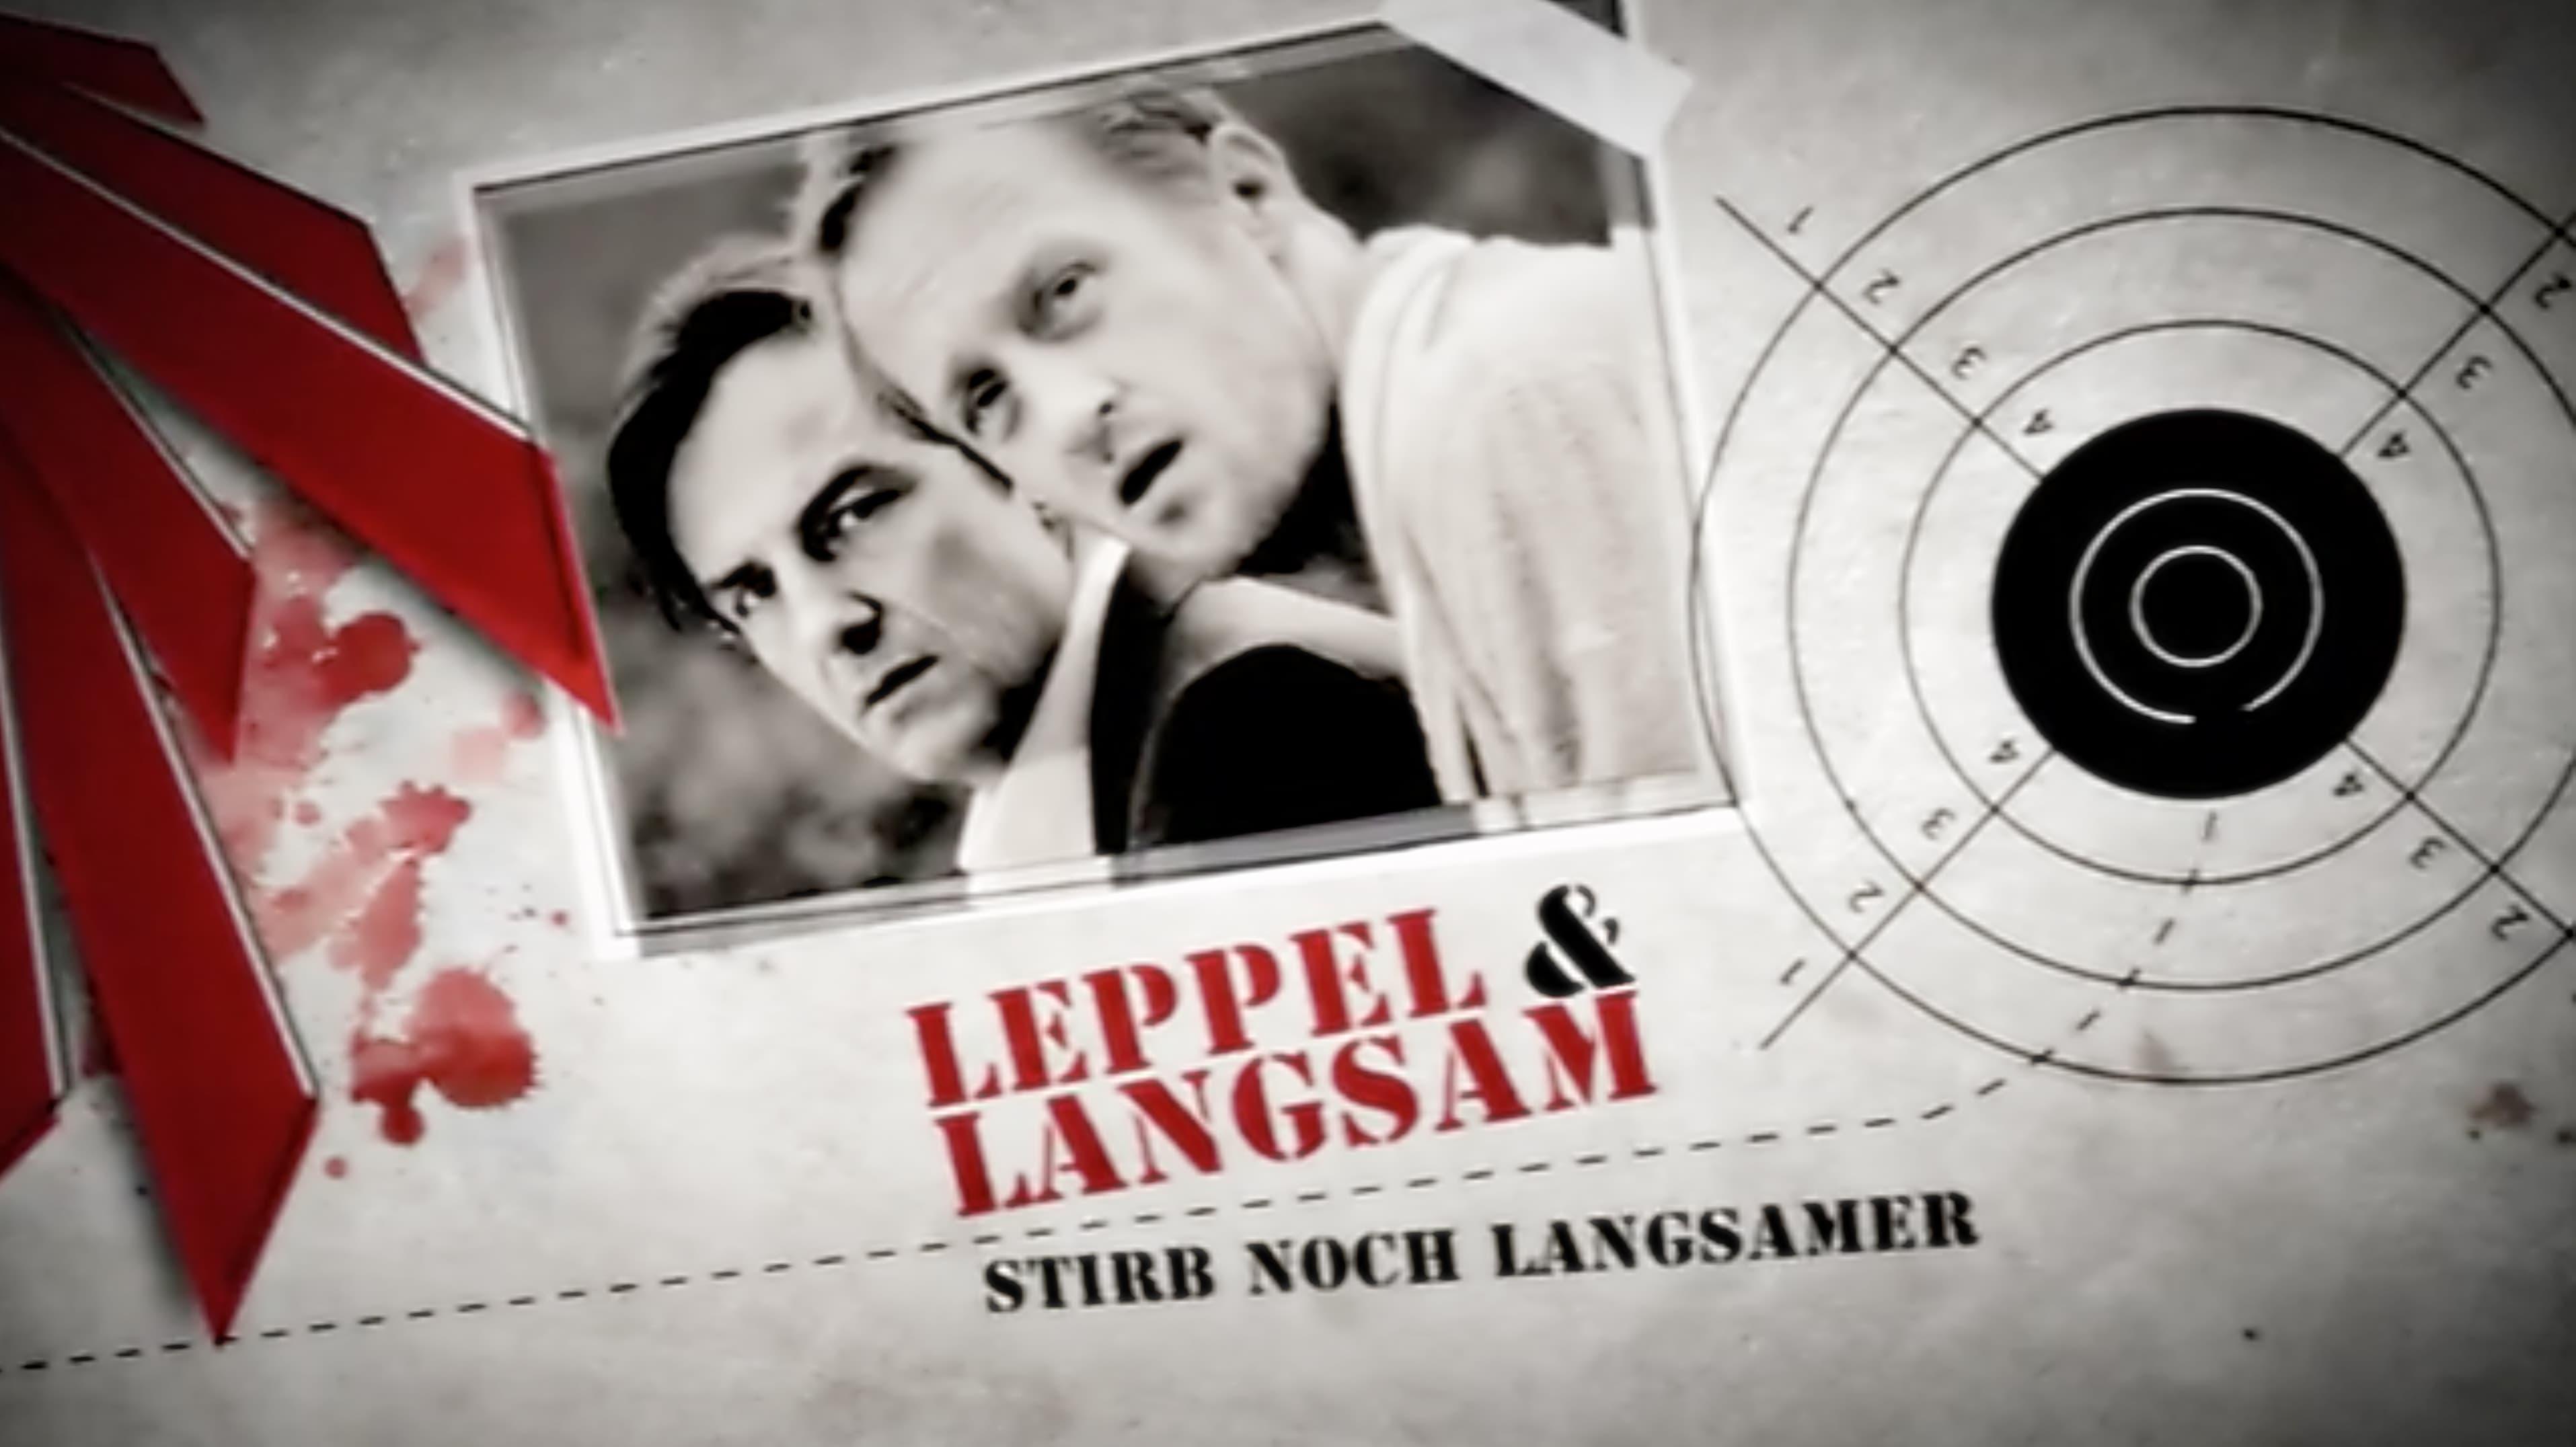 Leppel & Langsam backdrop